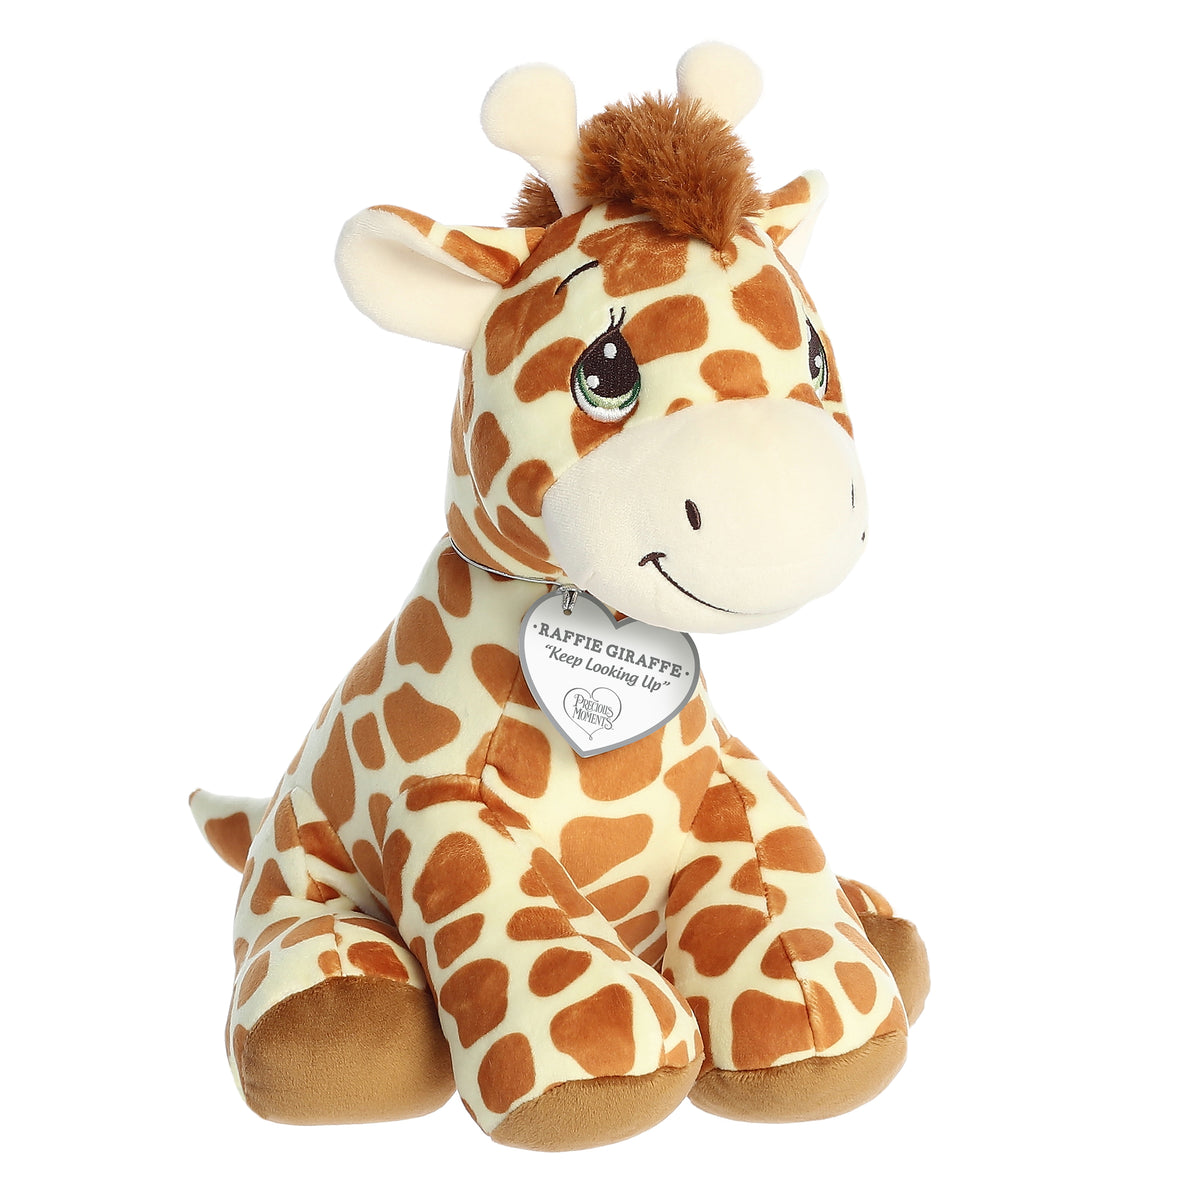 A seated squishy giraffe plush with big teardrop-shaped eyes, a classic giraffe pattern, and an inspirational tag.